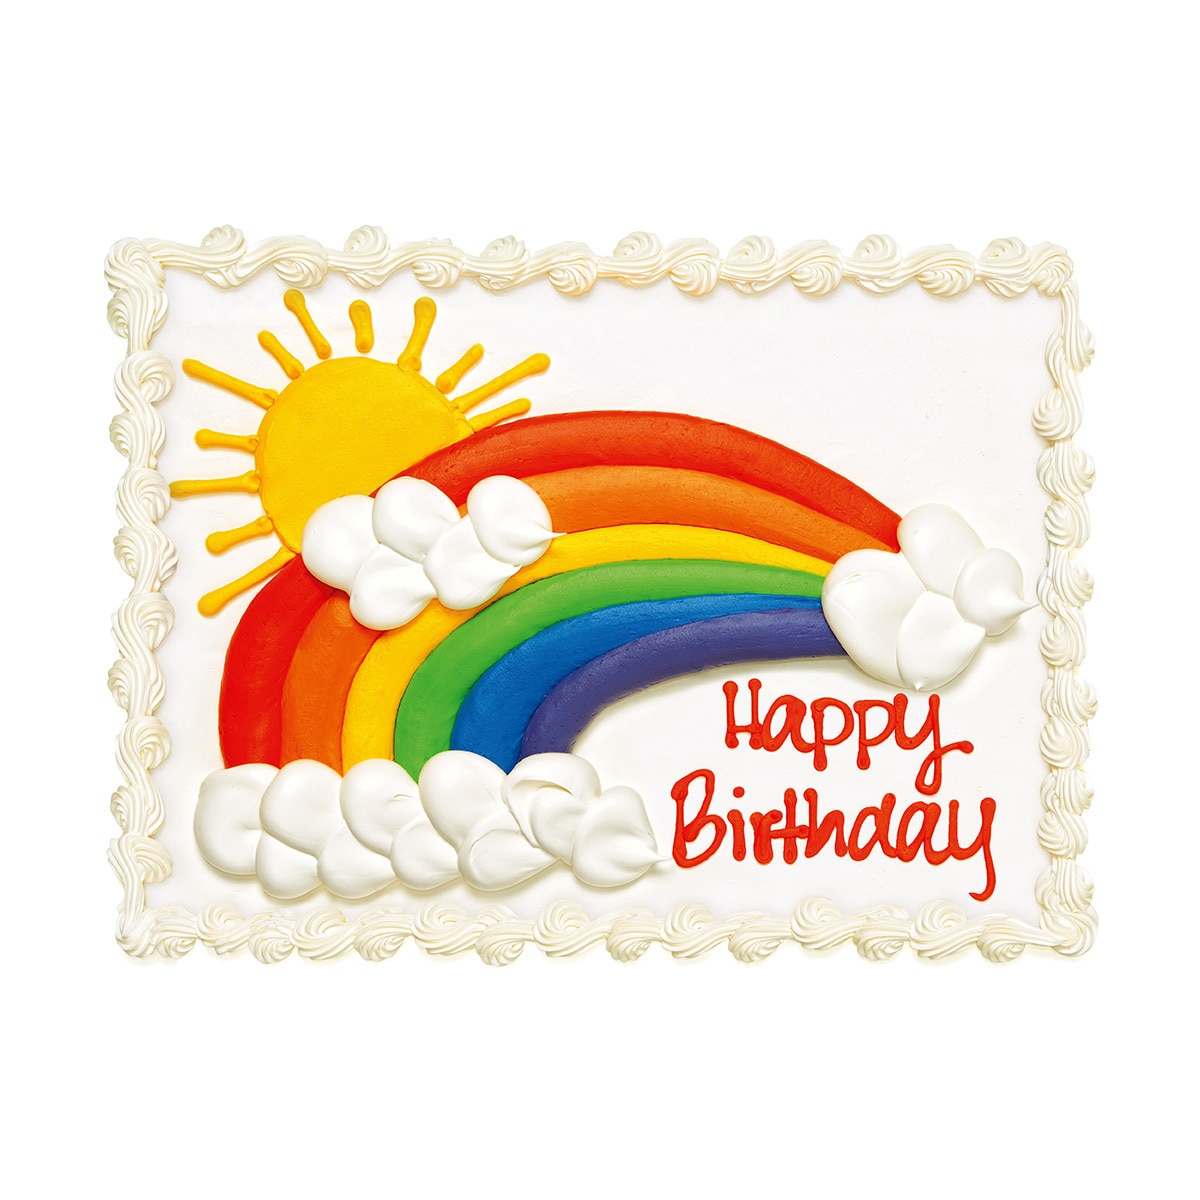 Order a Rainbow Cake - Costco Australia